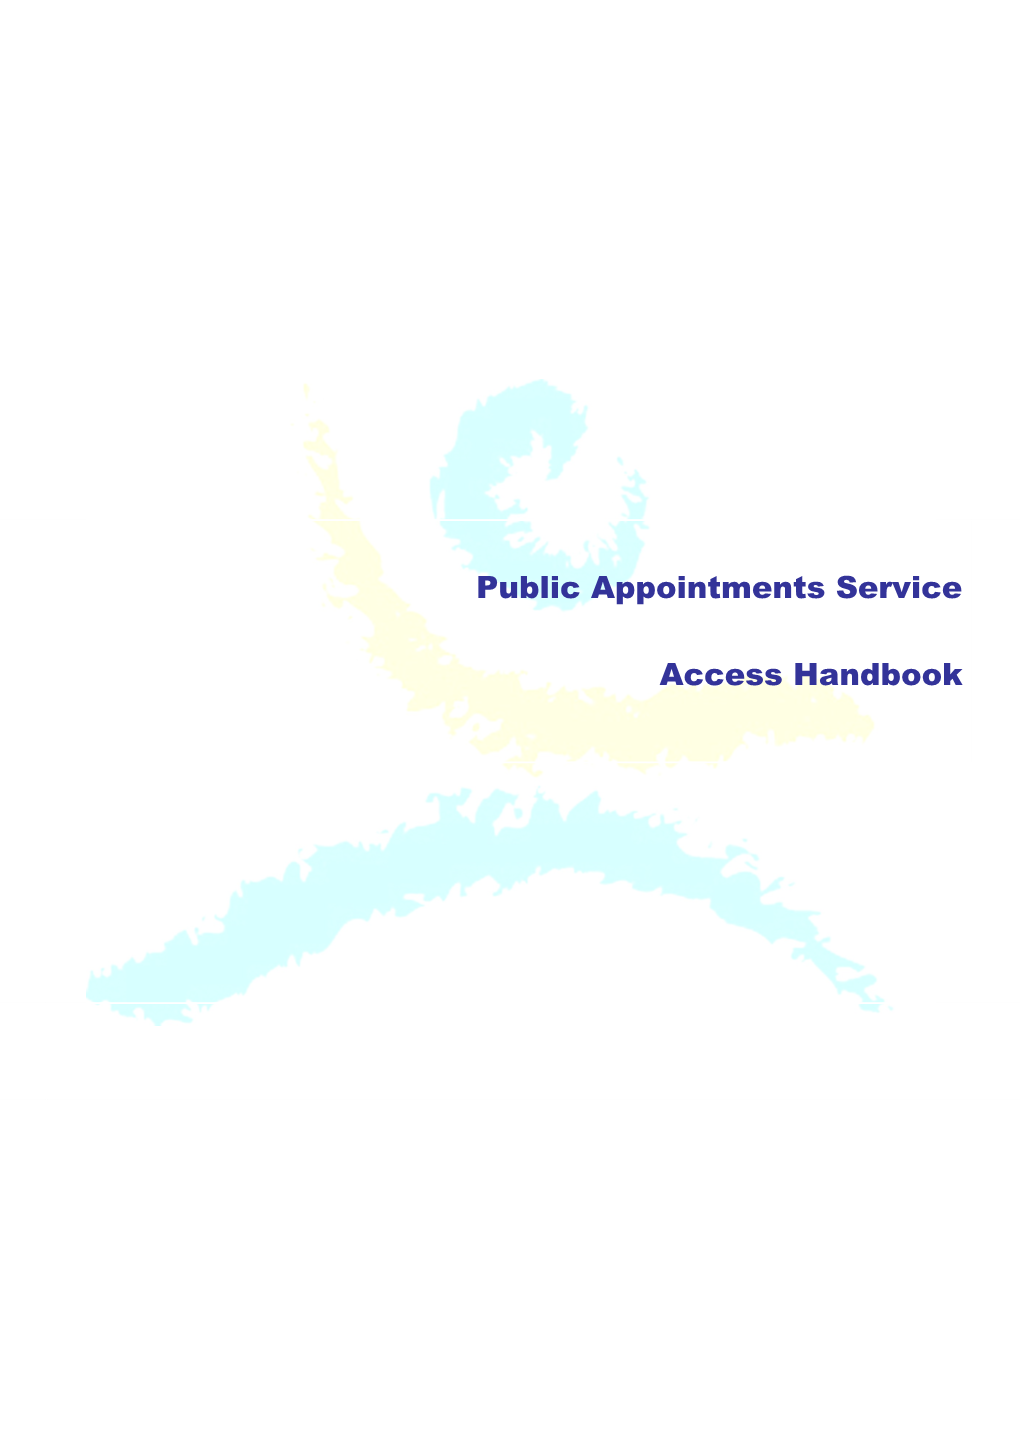 Public Appointments Service Access Handbook 12 Jan 2010